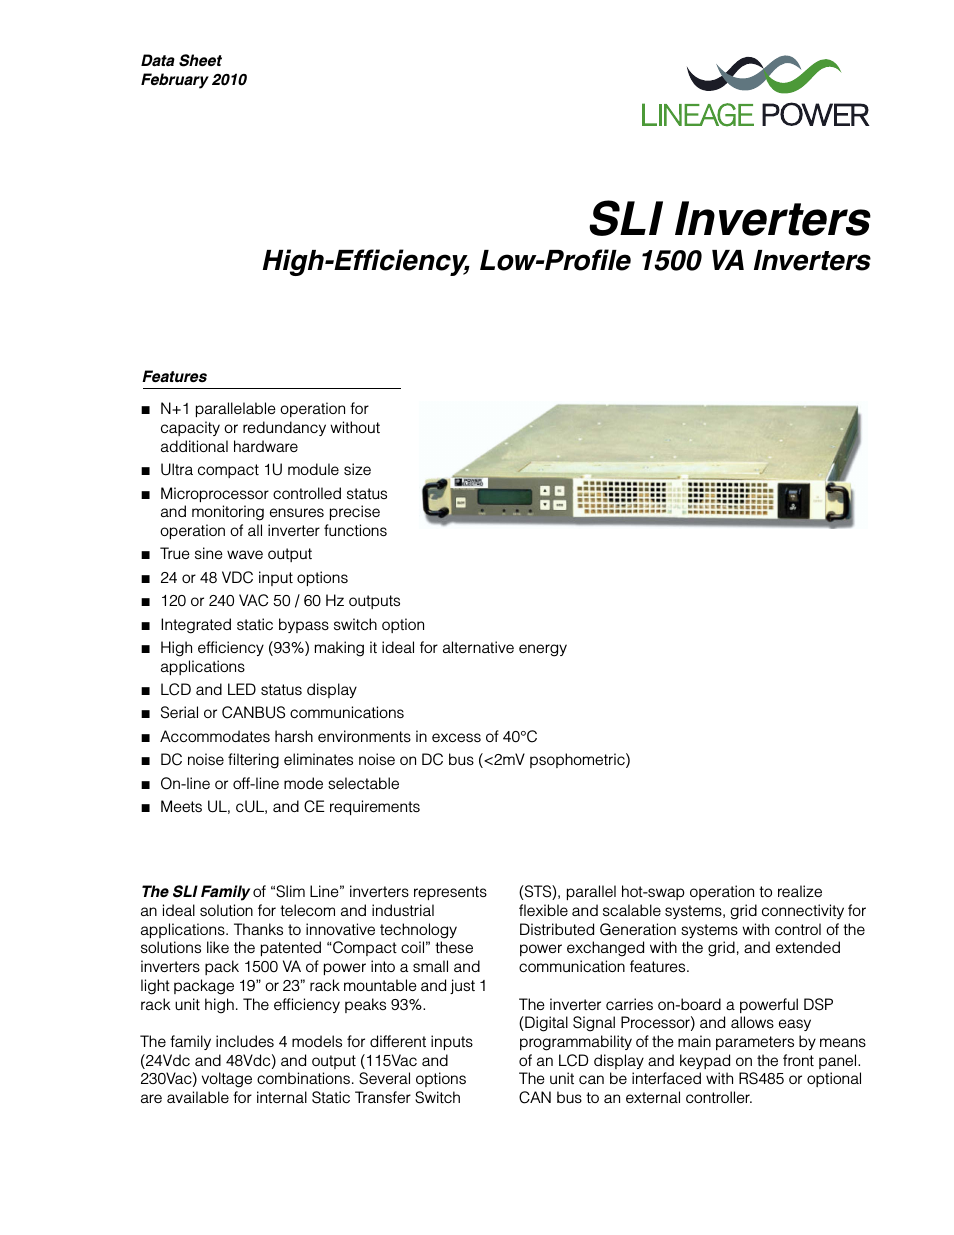 SLI Inverters